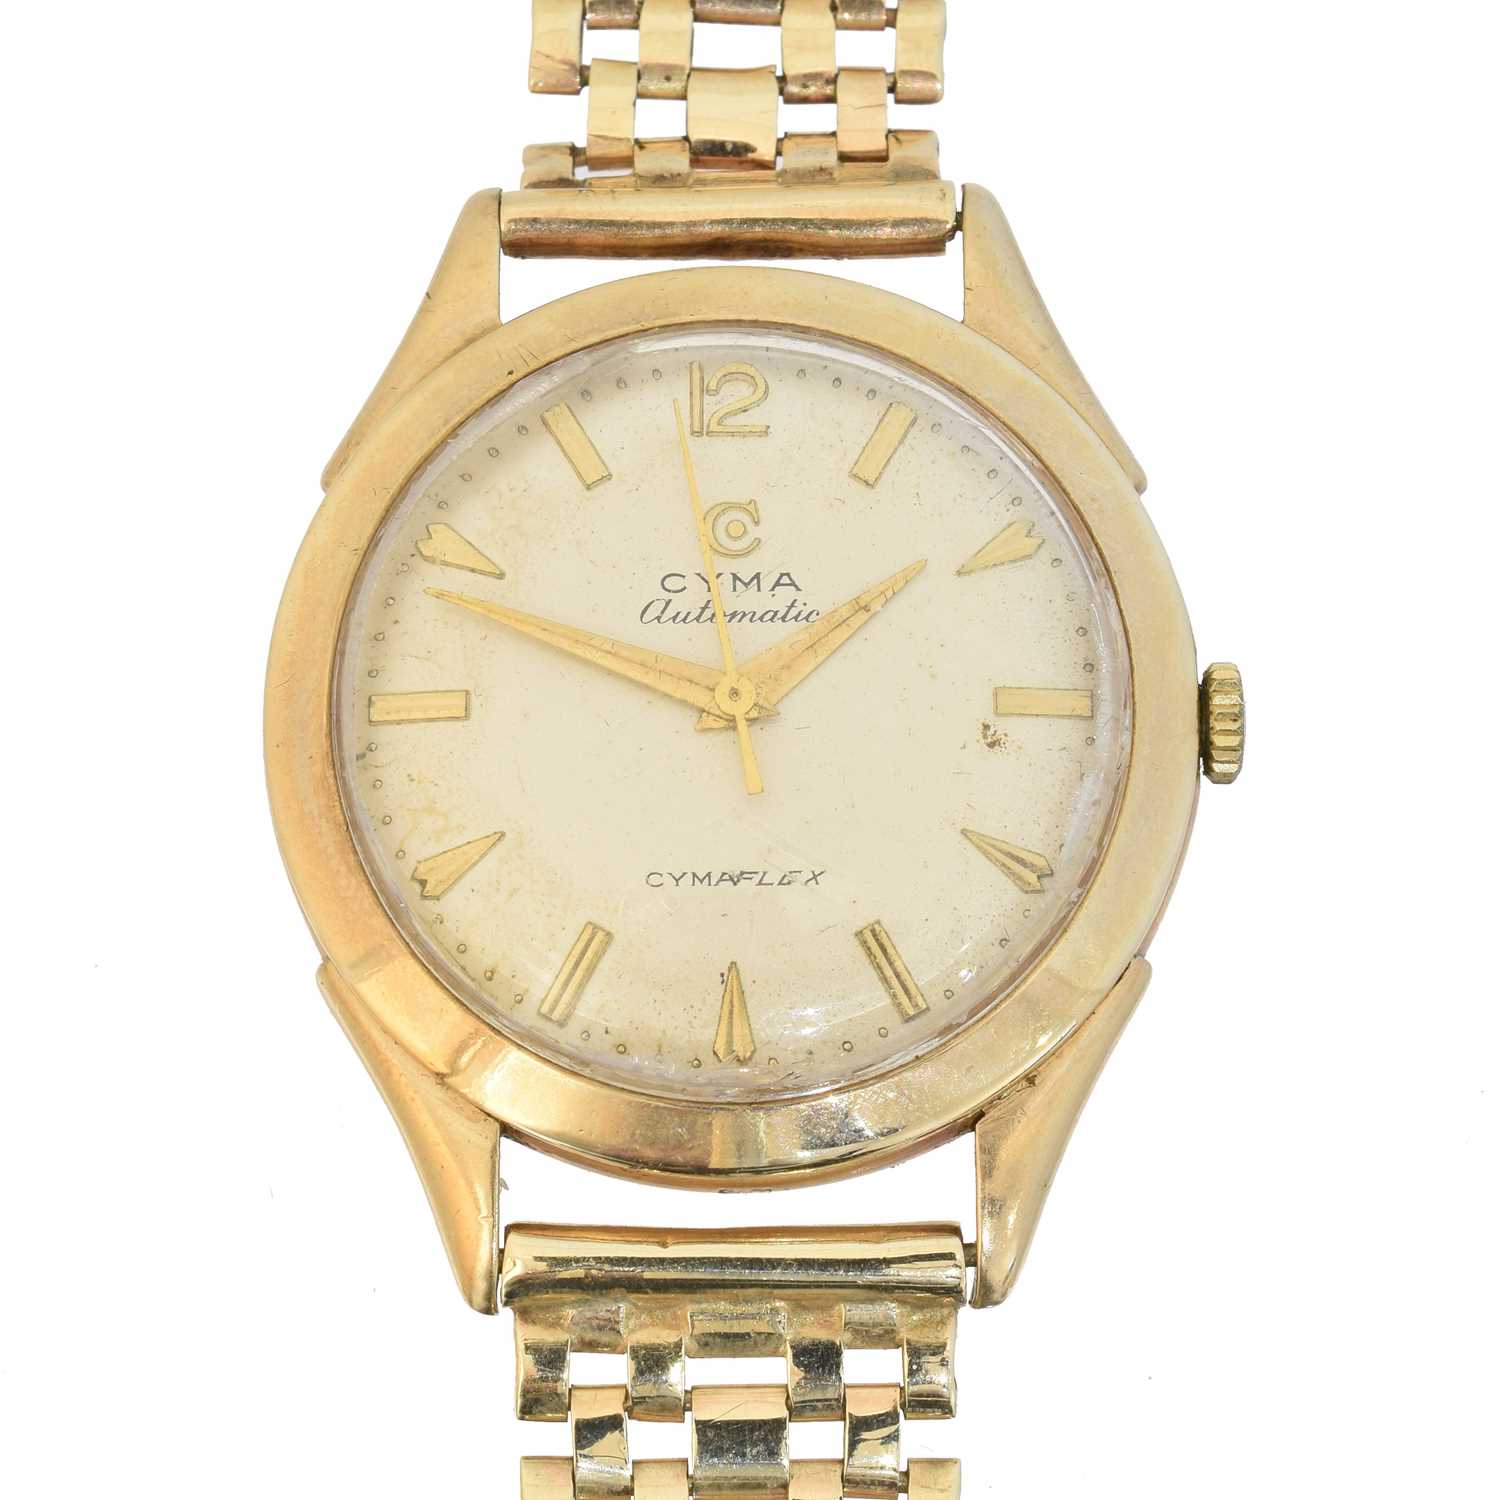 176 - A 9ct gold Cyma 'Cymaflex' automatic wristwatch,